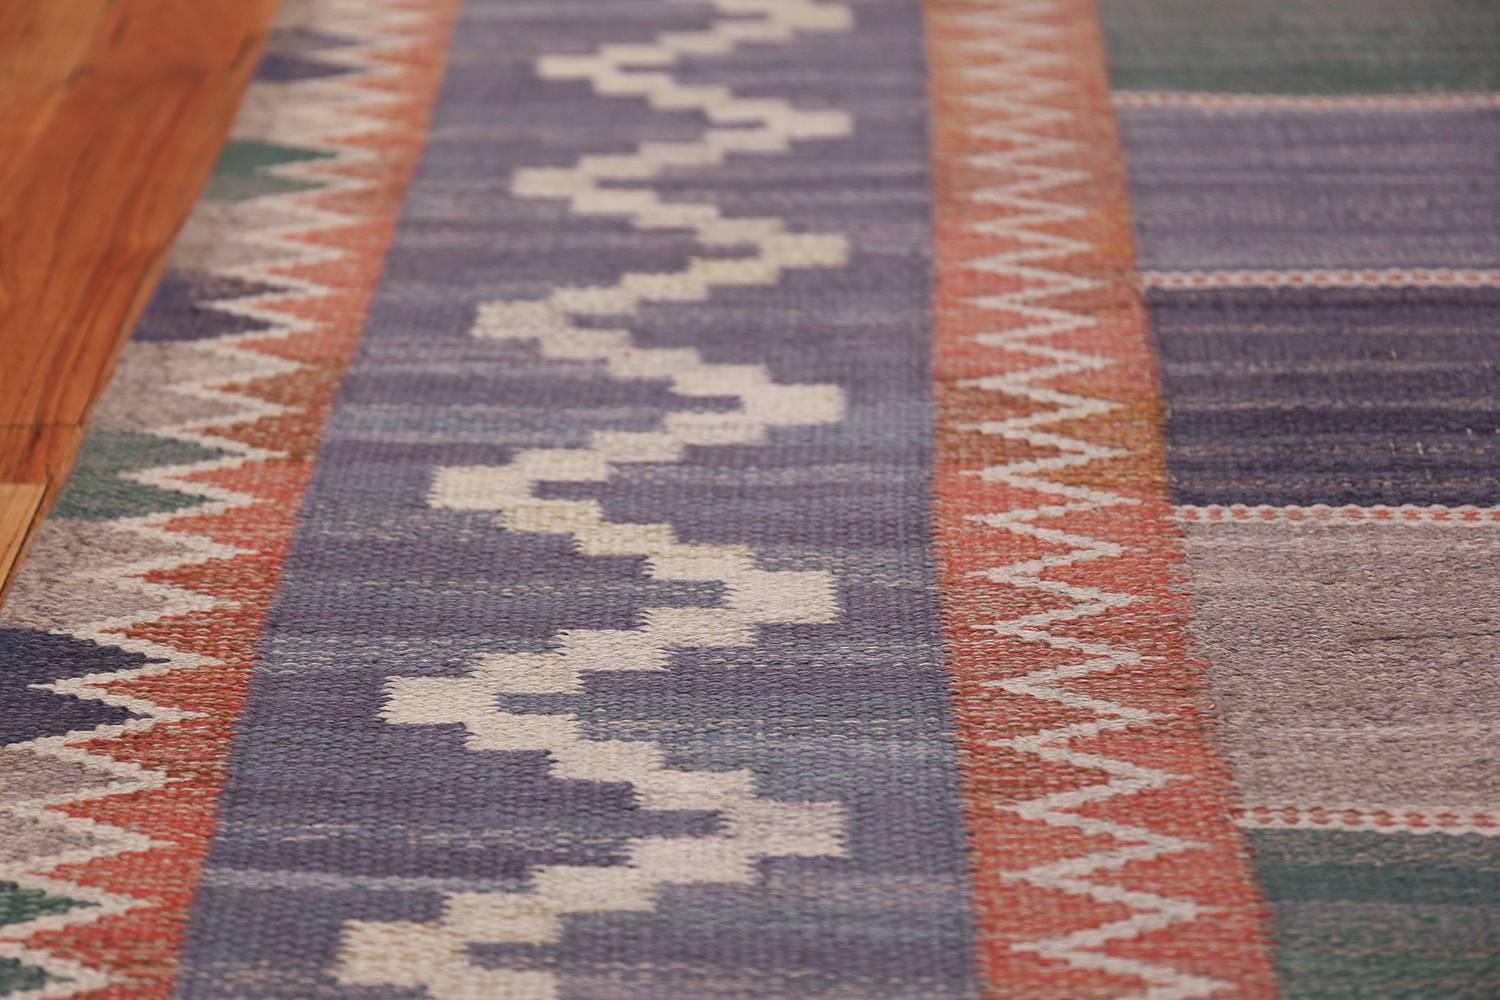 Beautiful vintage Märta Mass Scandinavian Swedish Kilim rug, country of origin / rug type: Scandinavia, date circa mid–20th century. Size: 5 ft 10 in x 8 ft 2 in (1.78 m x 2.49 m)

This beautifully artistic vintage Marta Maas Fjatterstorm rug